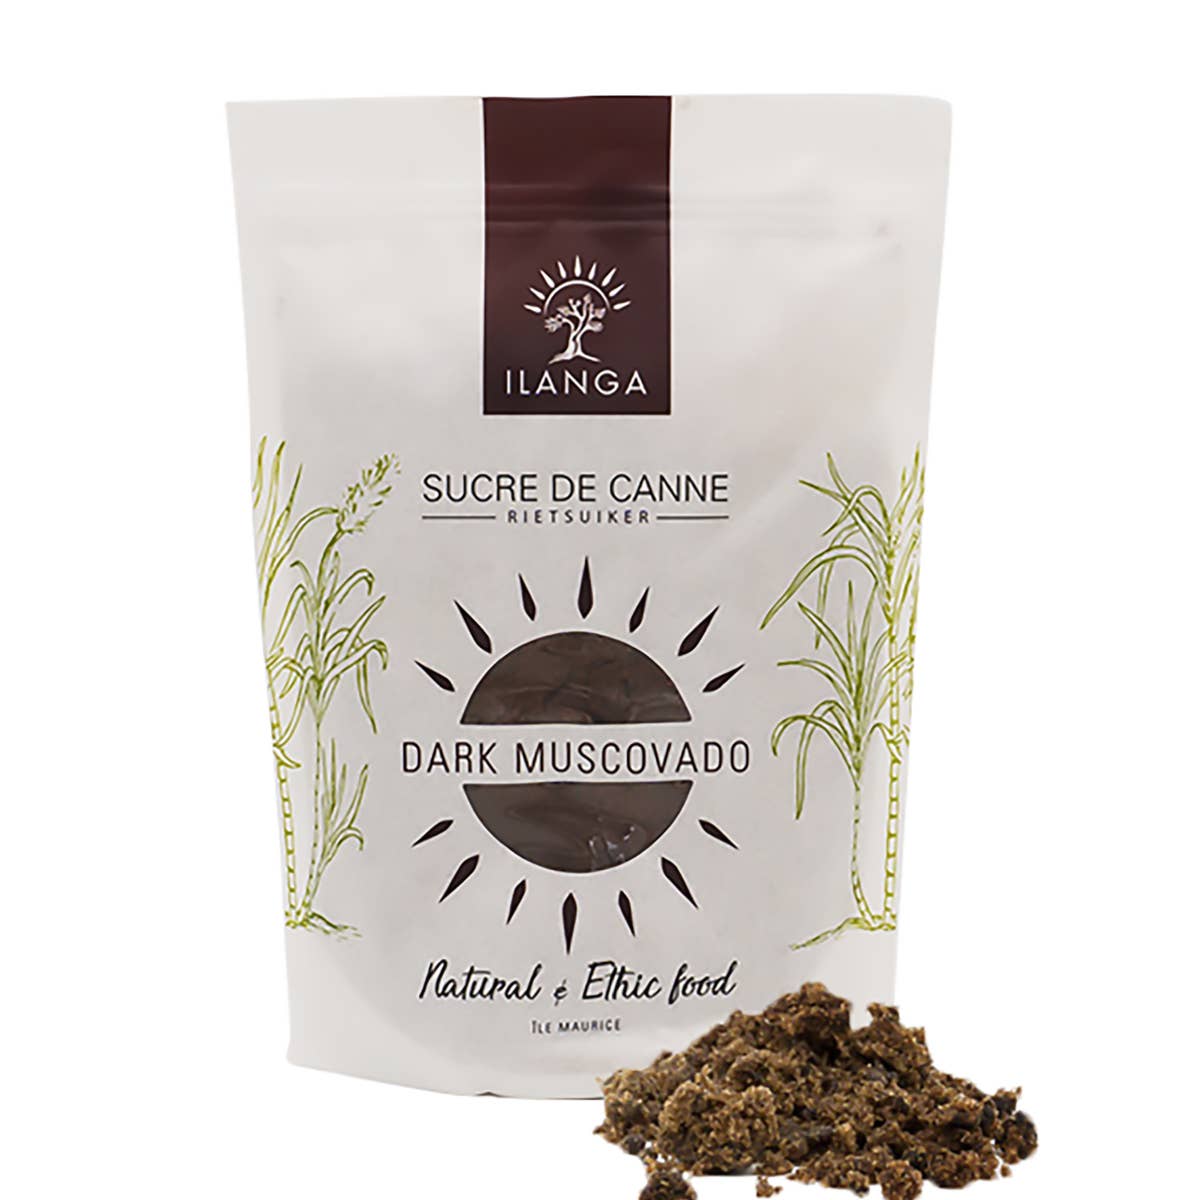 Wholesale Cane Sugar - Dark Muscovado 500g for your store - Faire